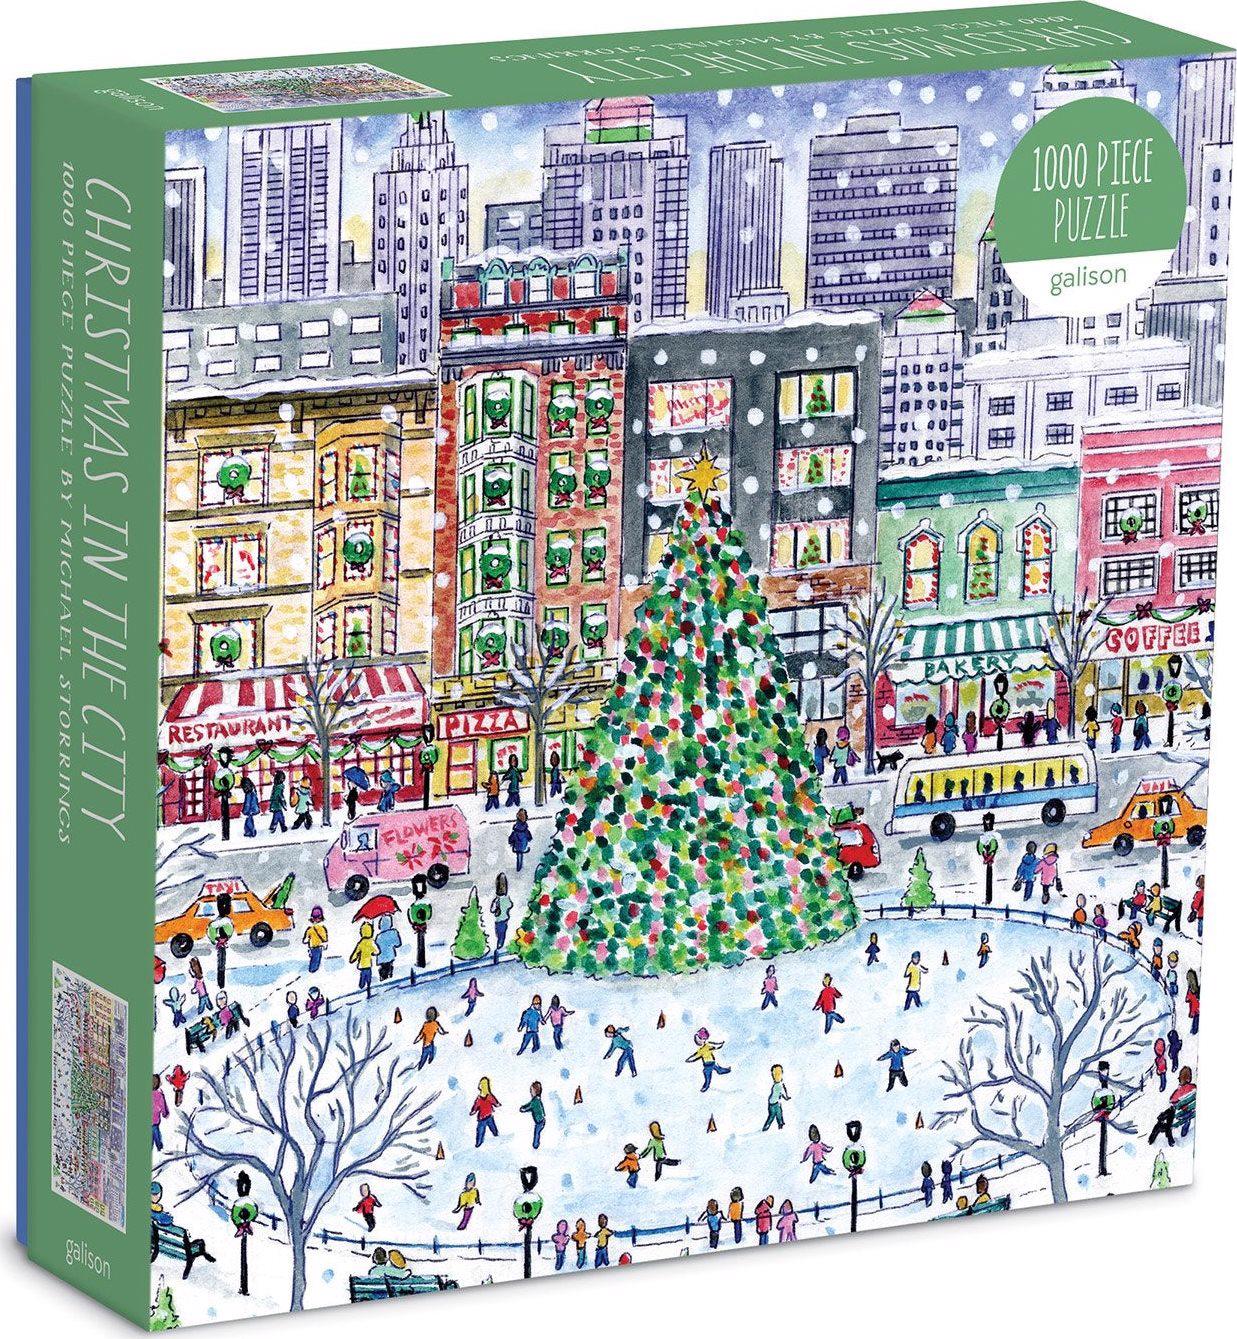 Puzzle Michael Storrings: Jul i byen